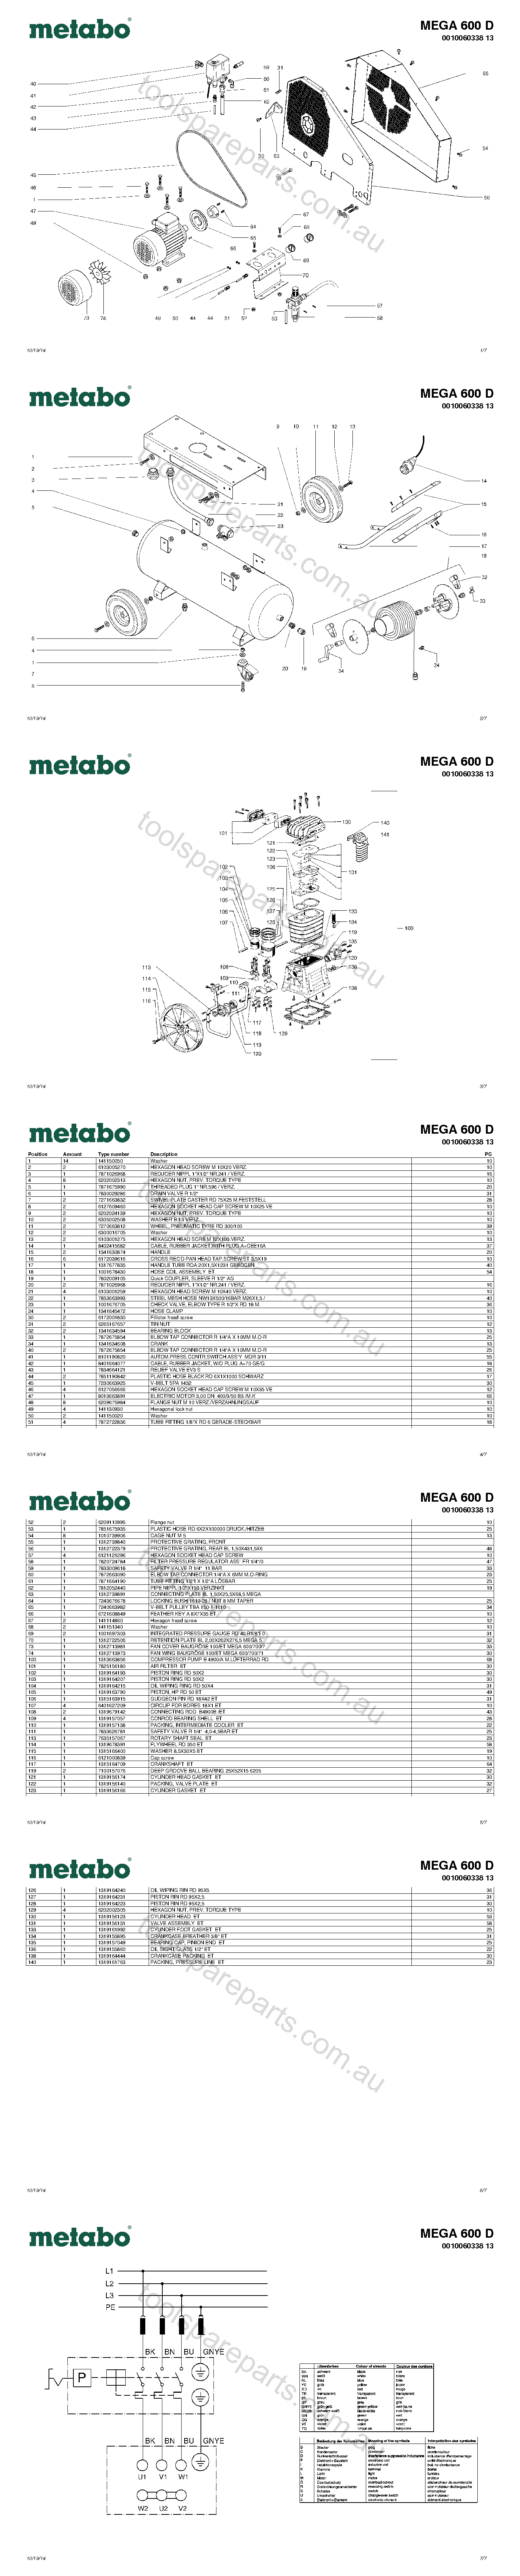 Metabo MEGA 600 D 0010060338 13  Diagram 1